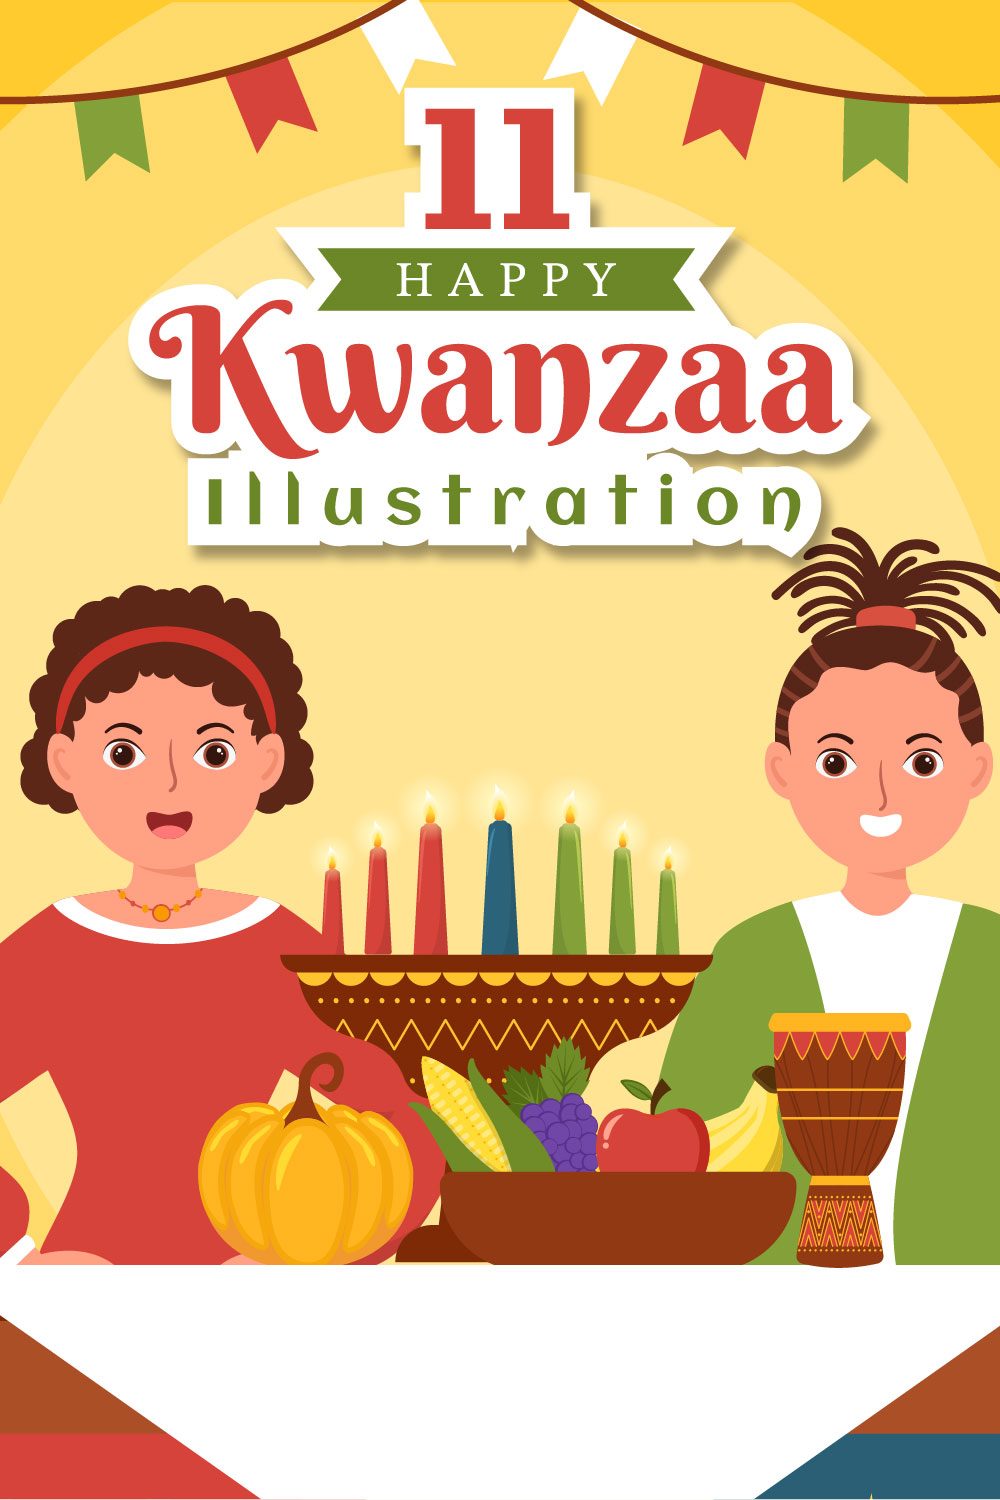 11 Happy Kwanzaa Holiday African Illustration pinterest image.